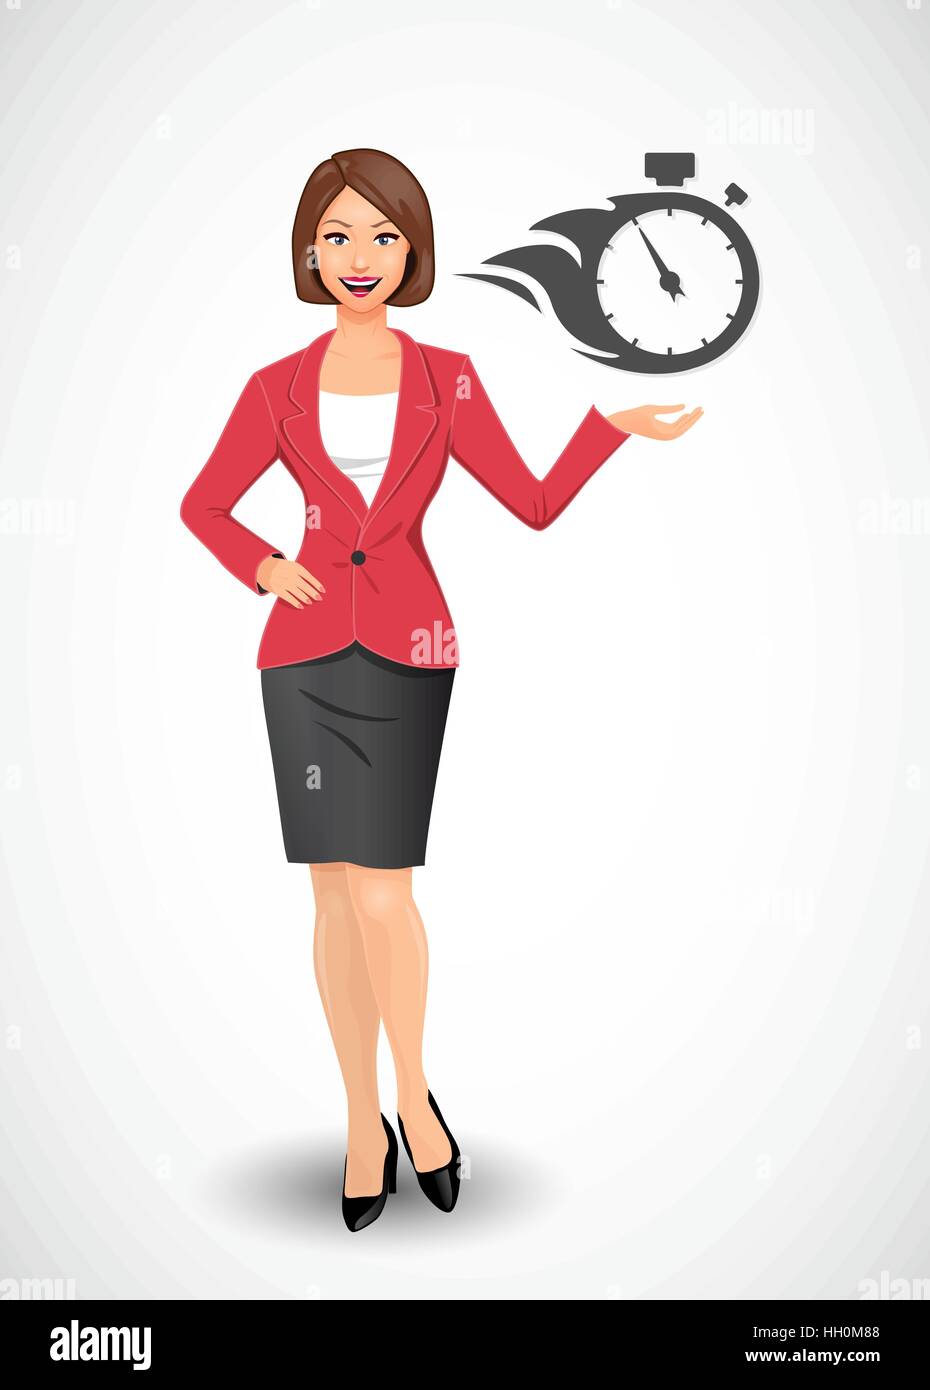 Businesswomen - woman as manager Stock Vector